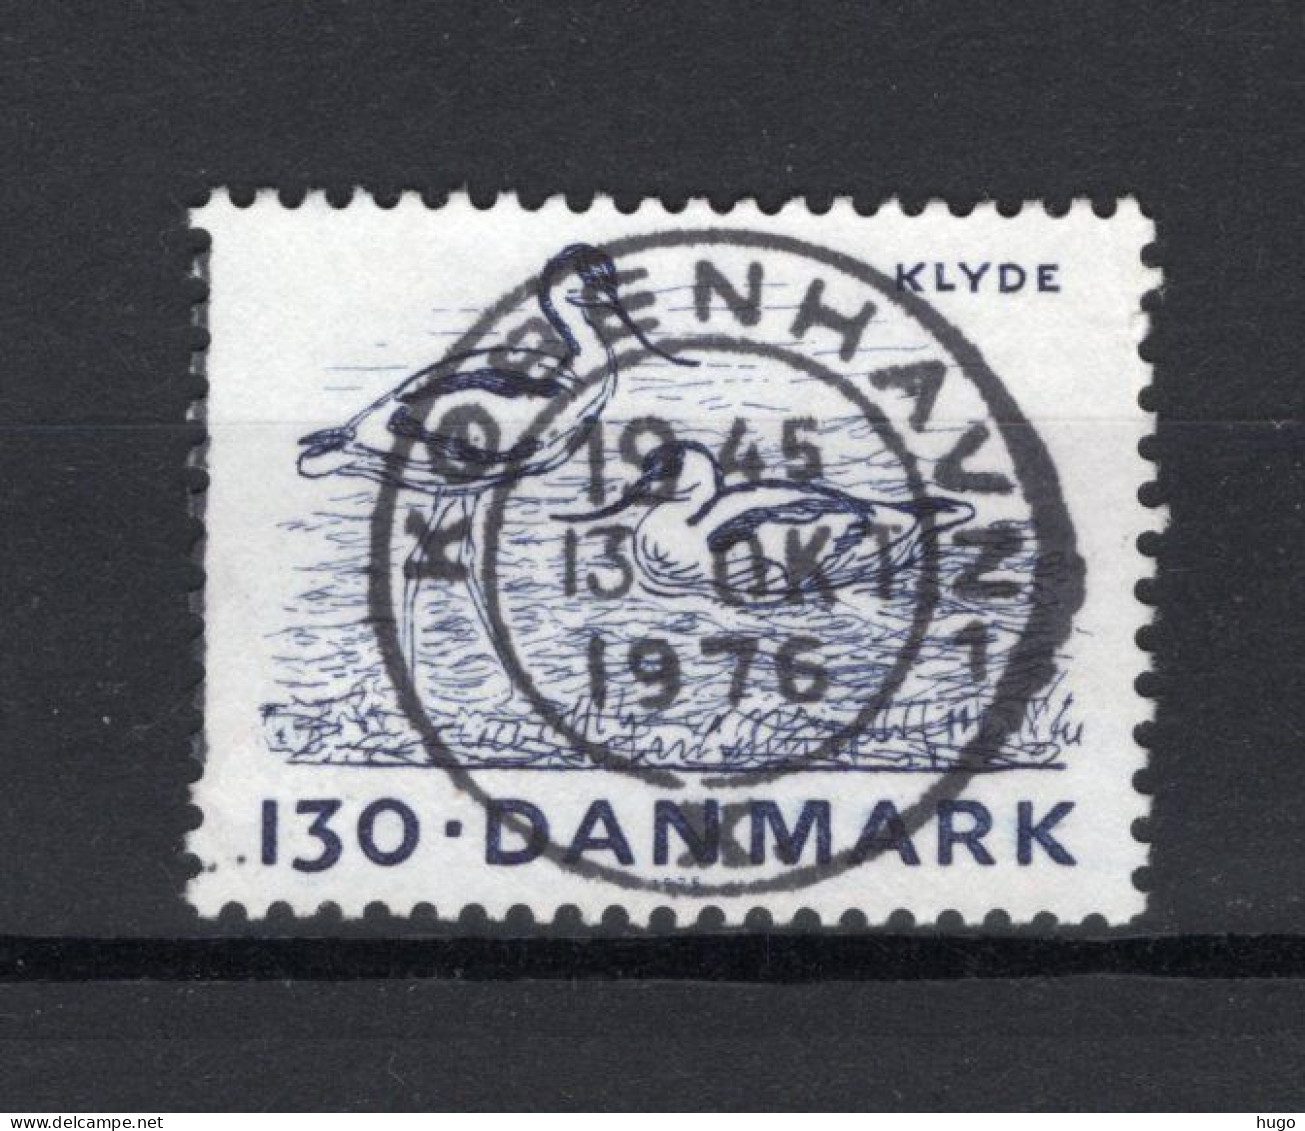 DENEMARKEN Yt. 610° Gestempeld 1975 - Used Stamps